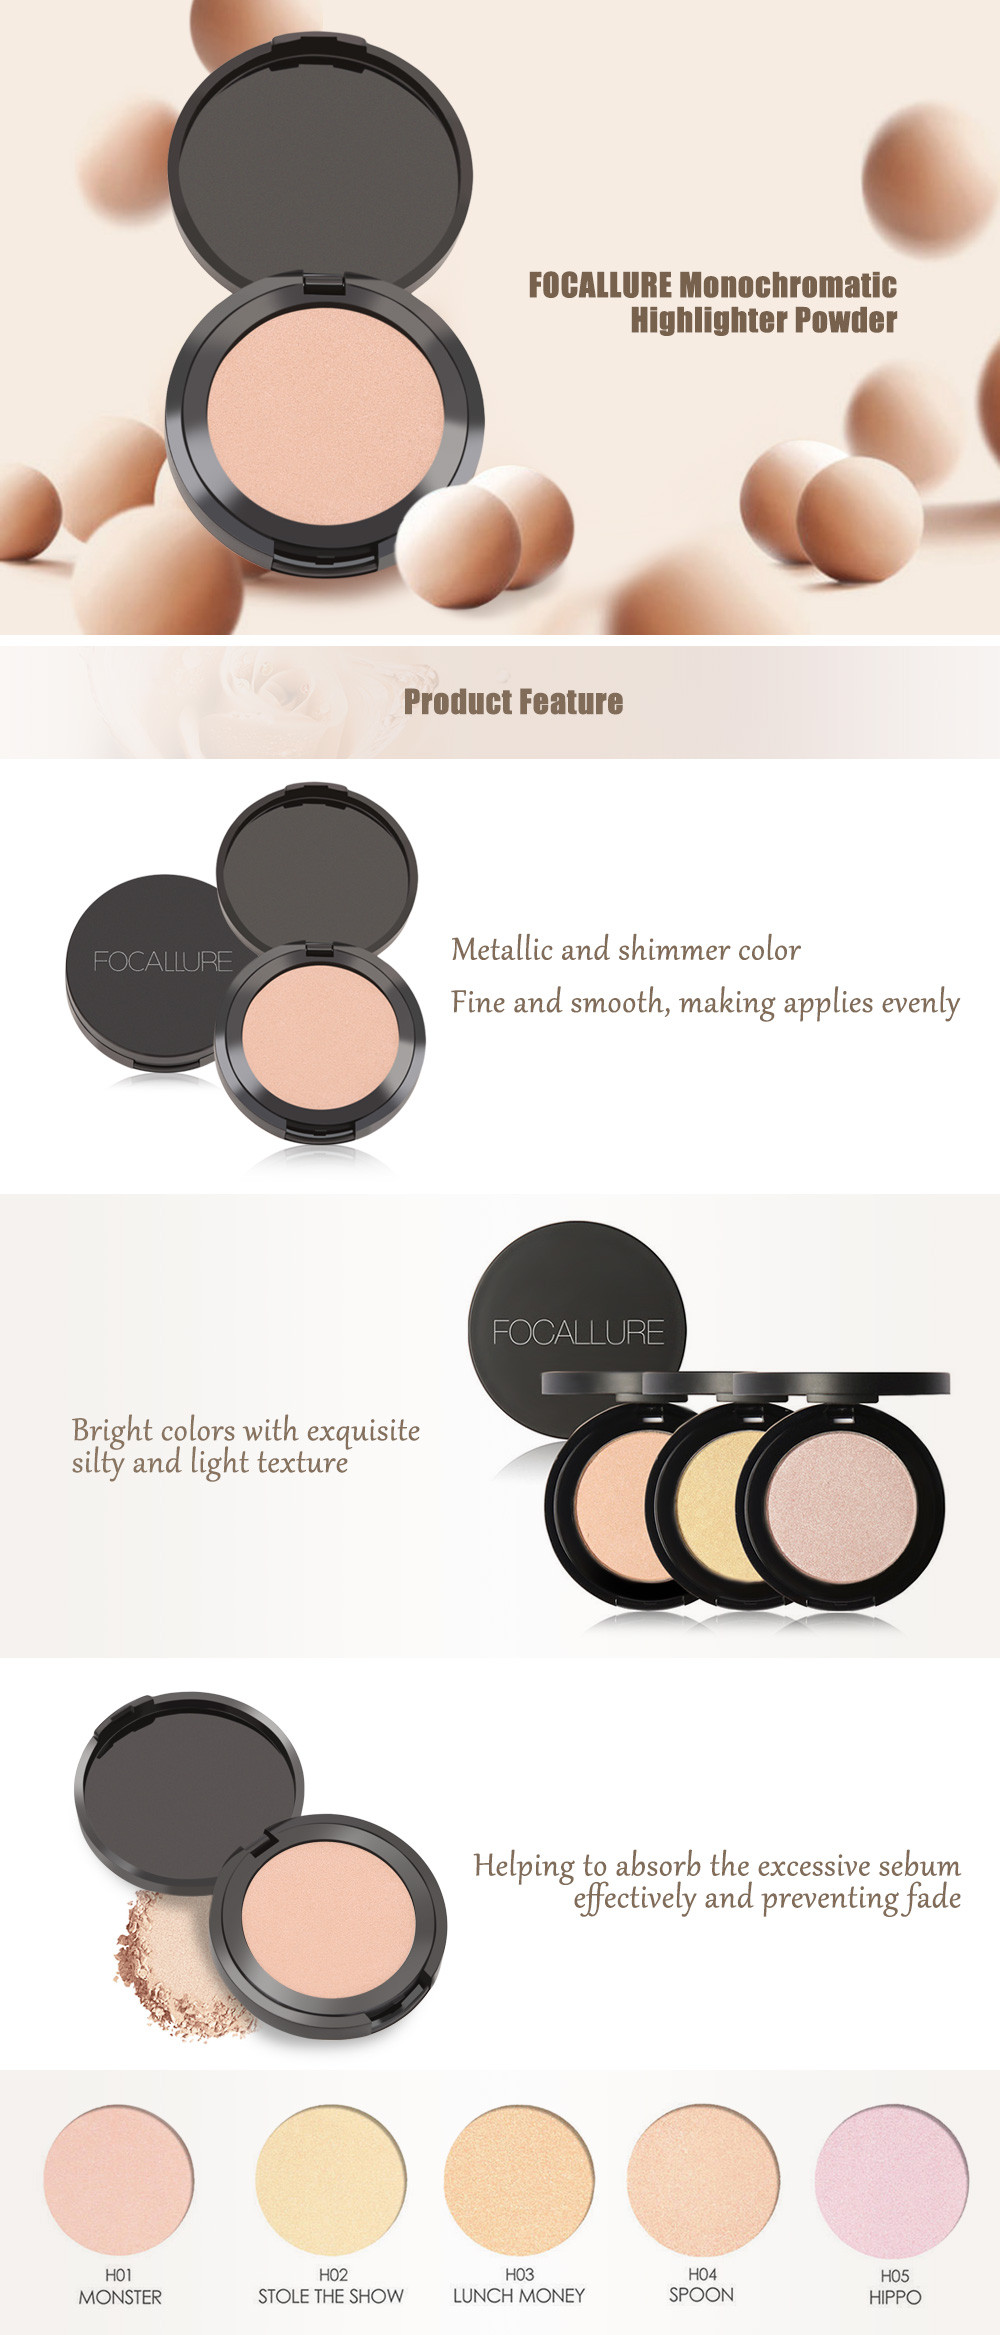 FOCALLURE Monochromatic Makeup Complexion Highlight Powder